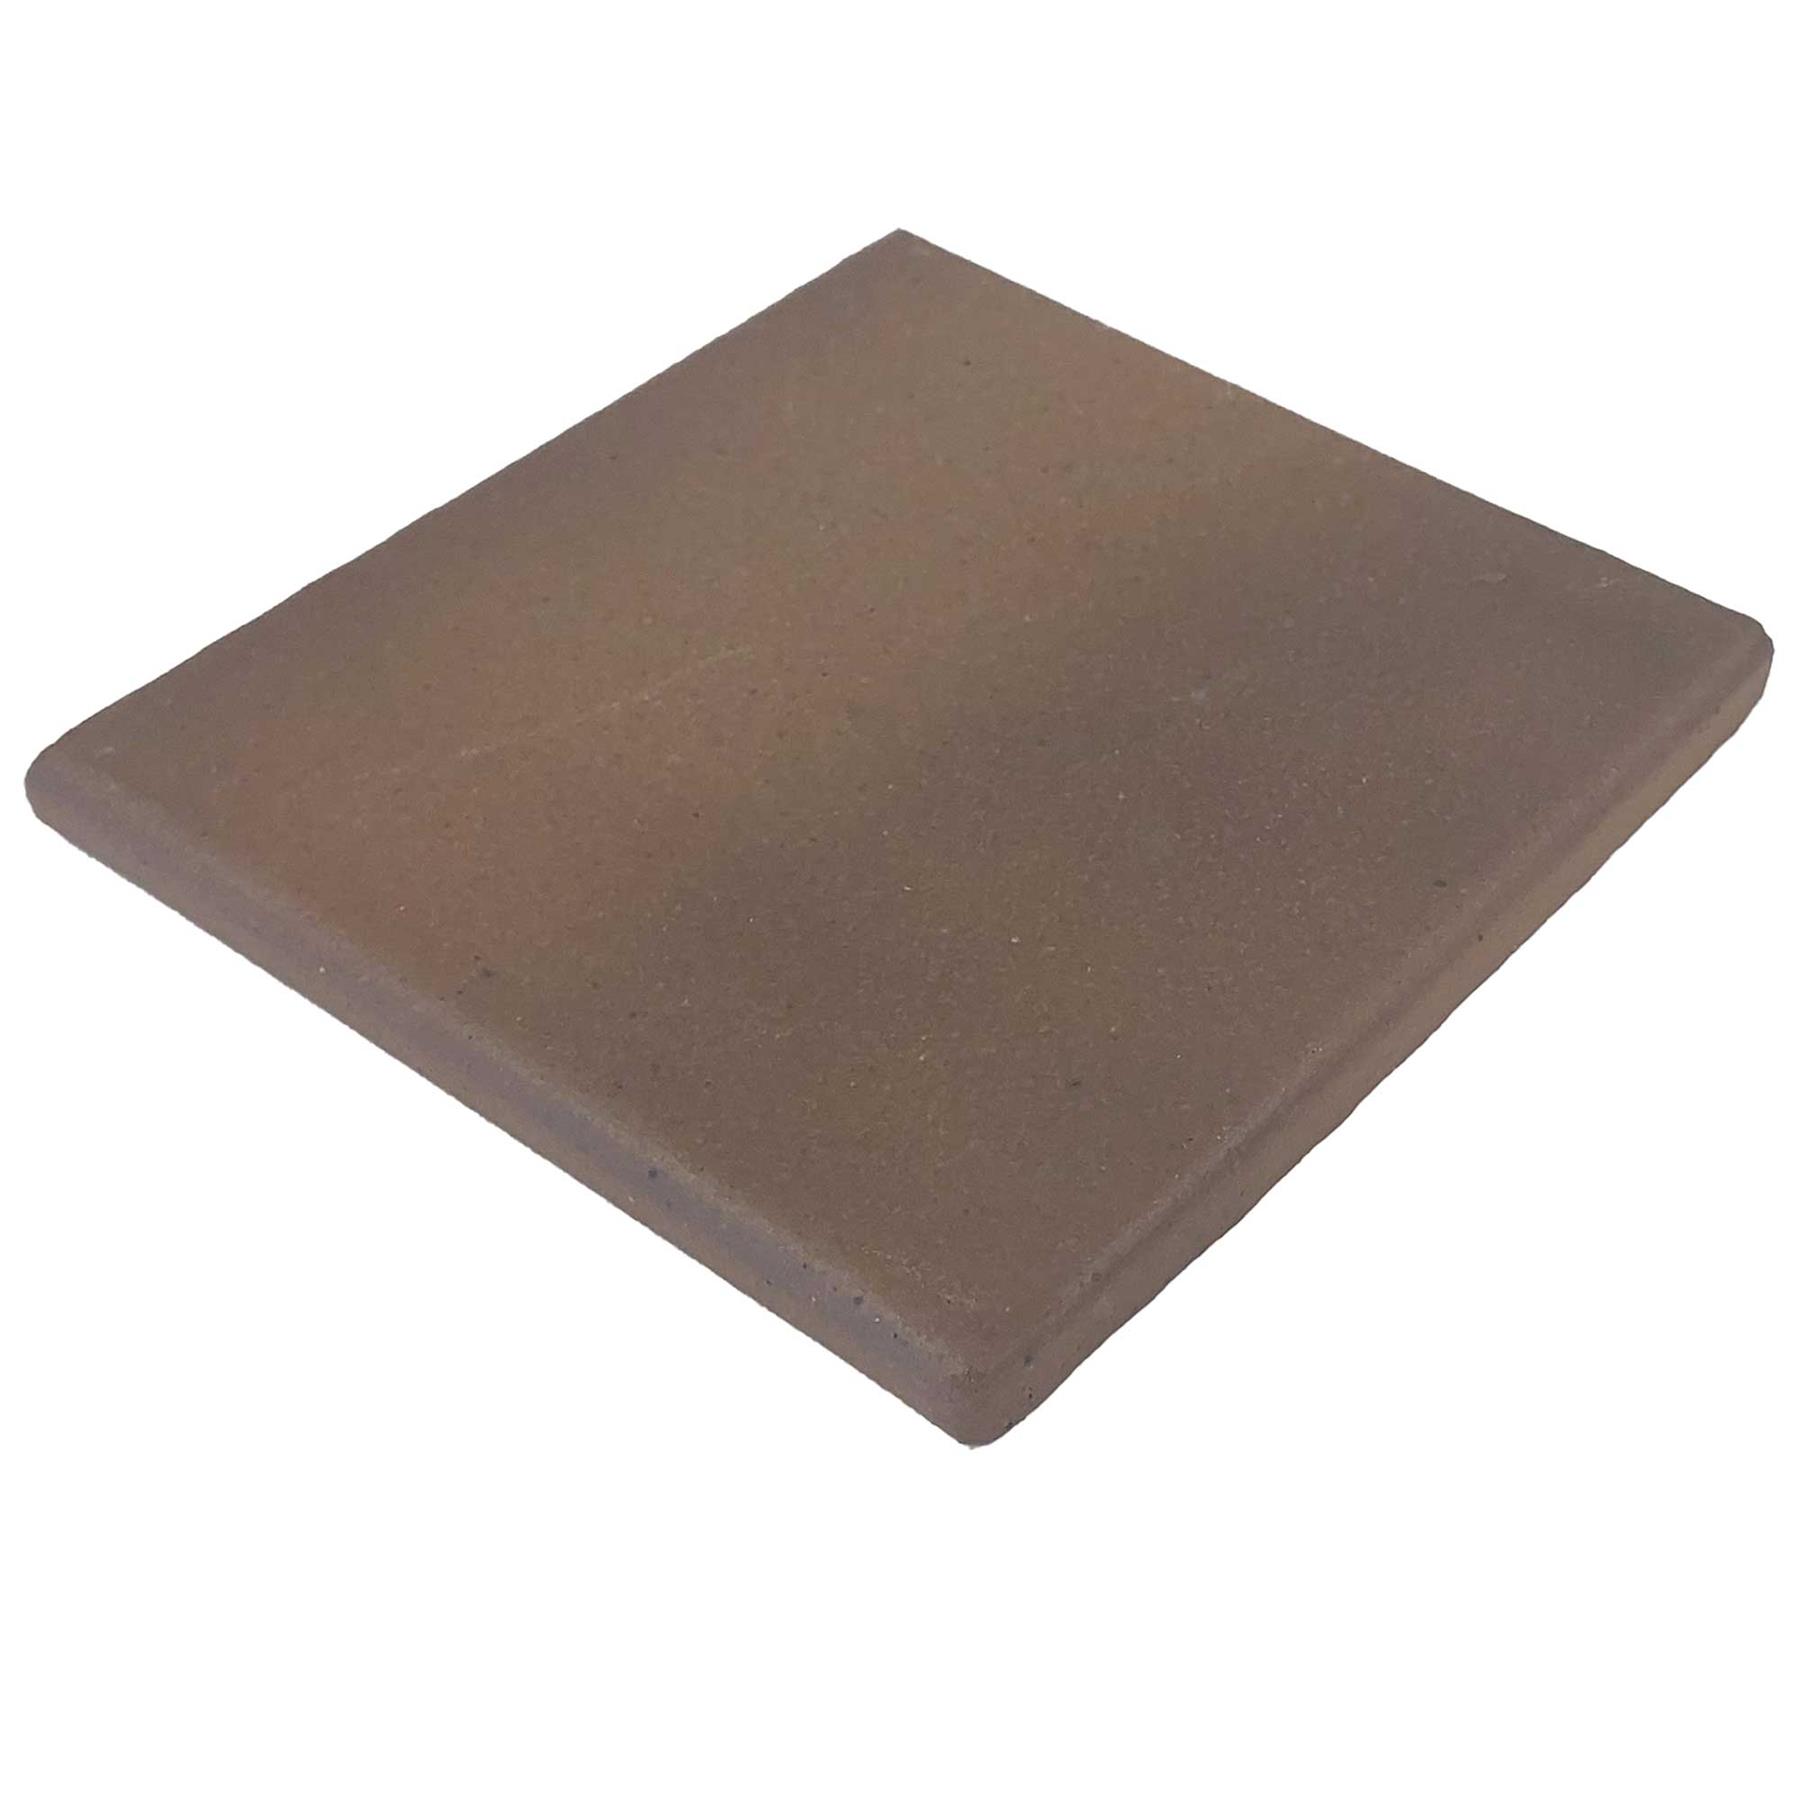 New Authentic Brown Quarry Tiles Double Round Edge 150x150mm